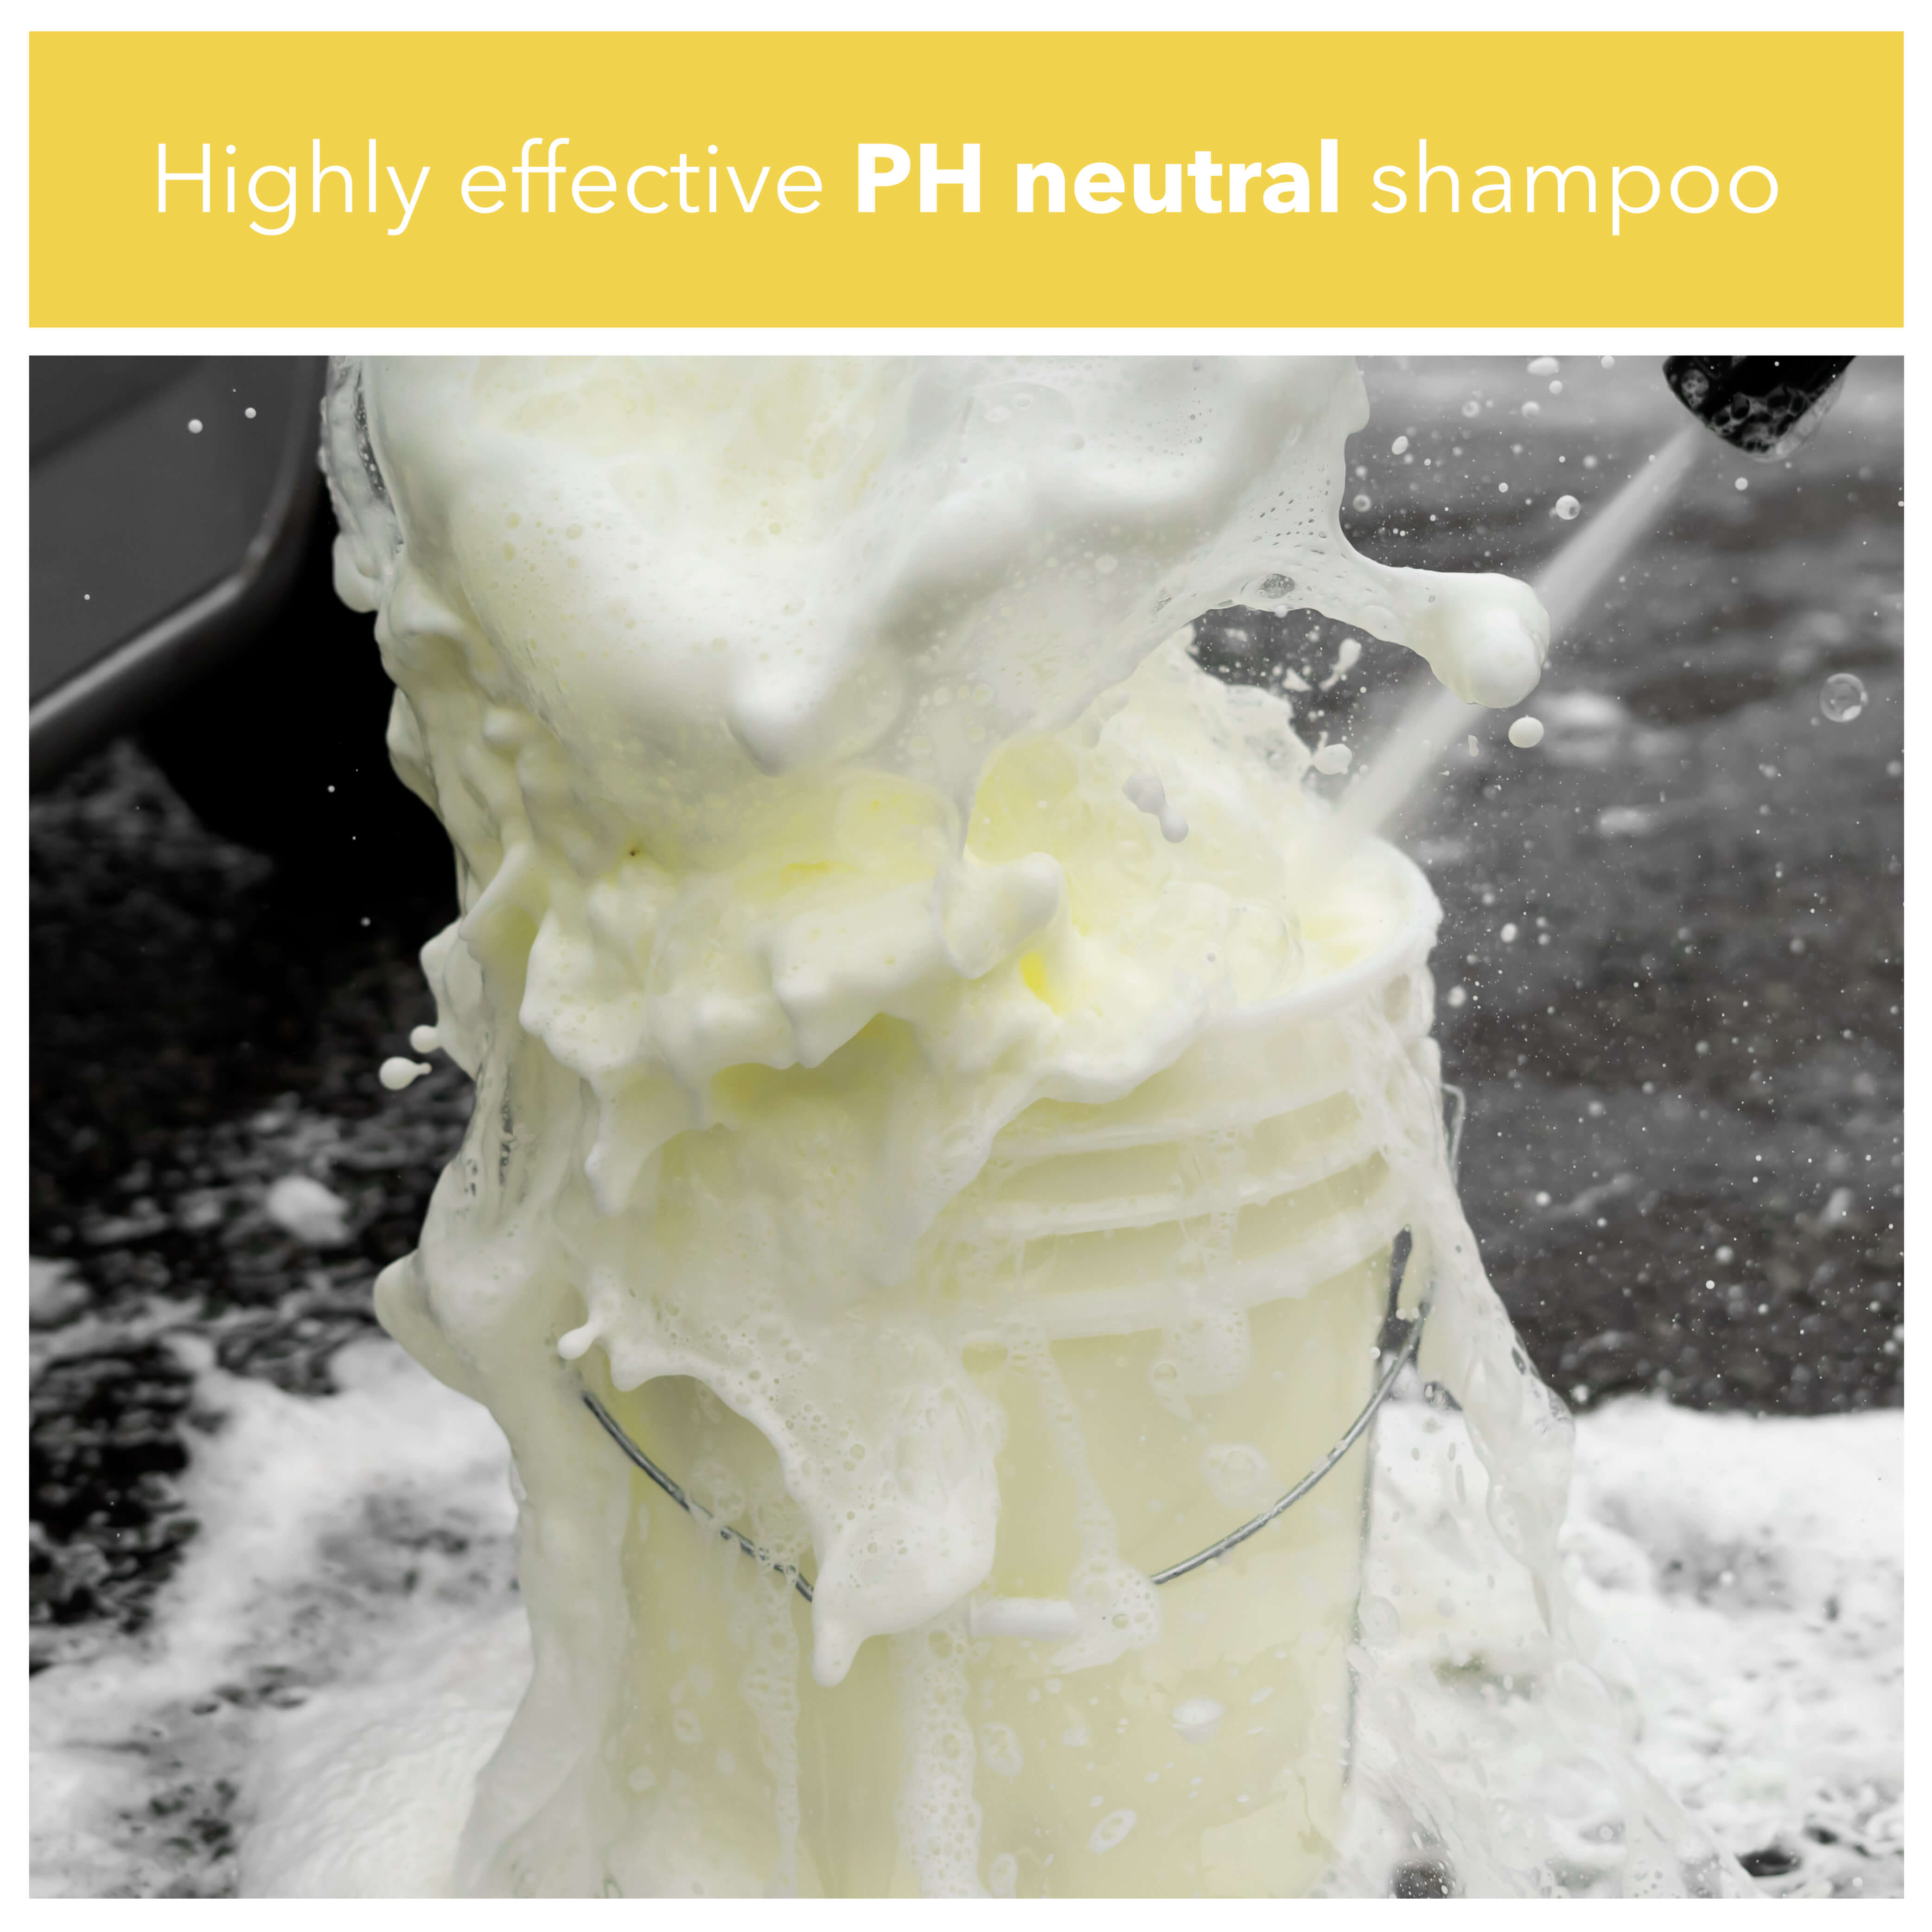 Highly effective PH neutral shampoo